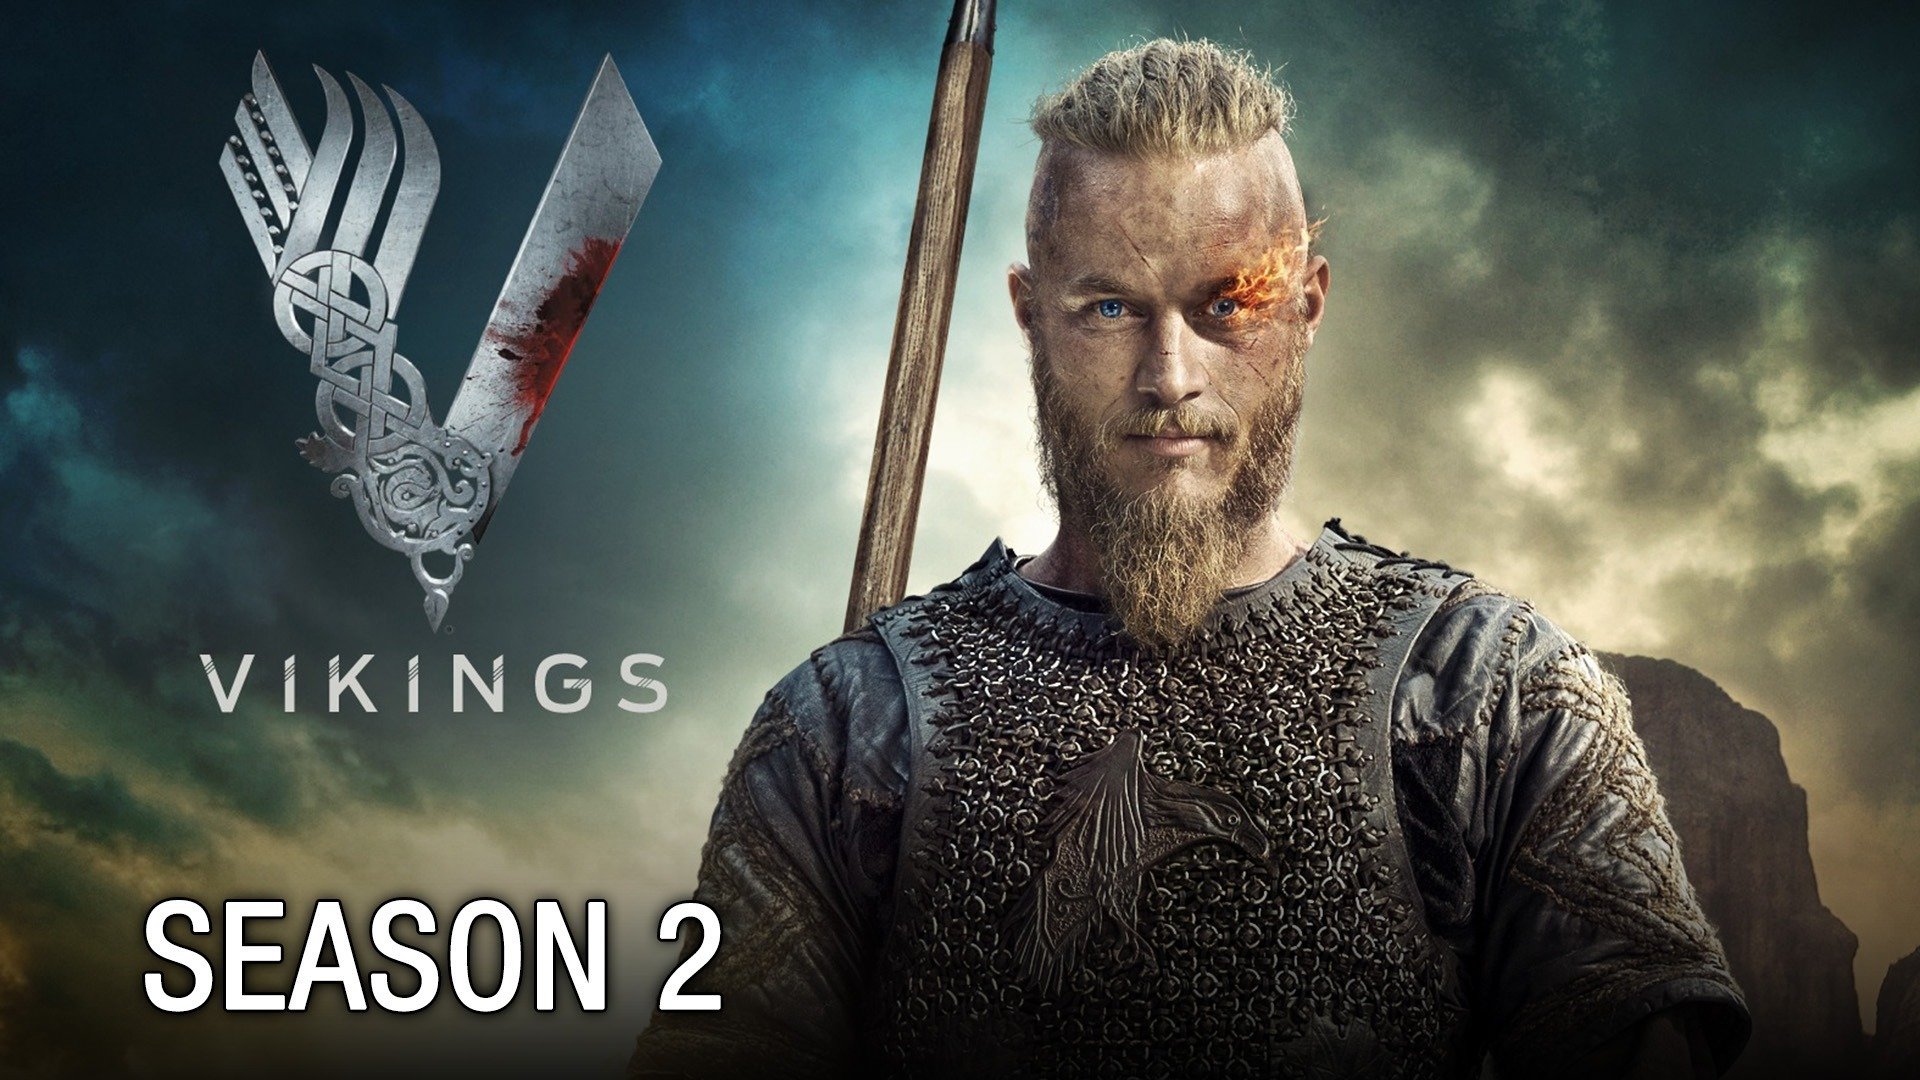 vikings season 5 complete download kickass